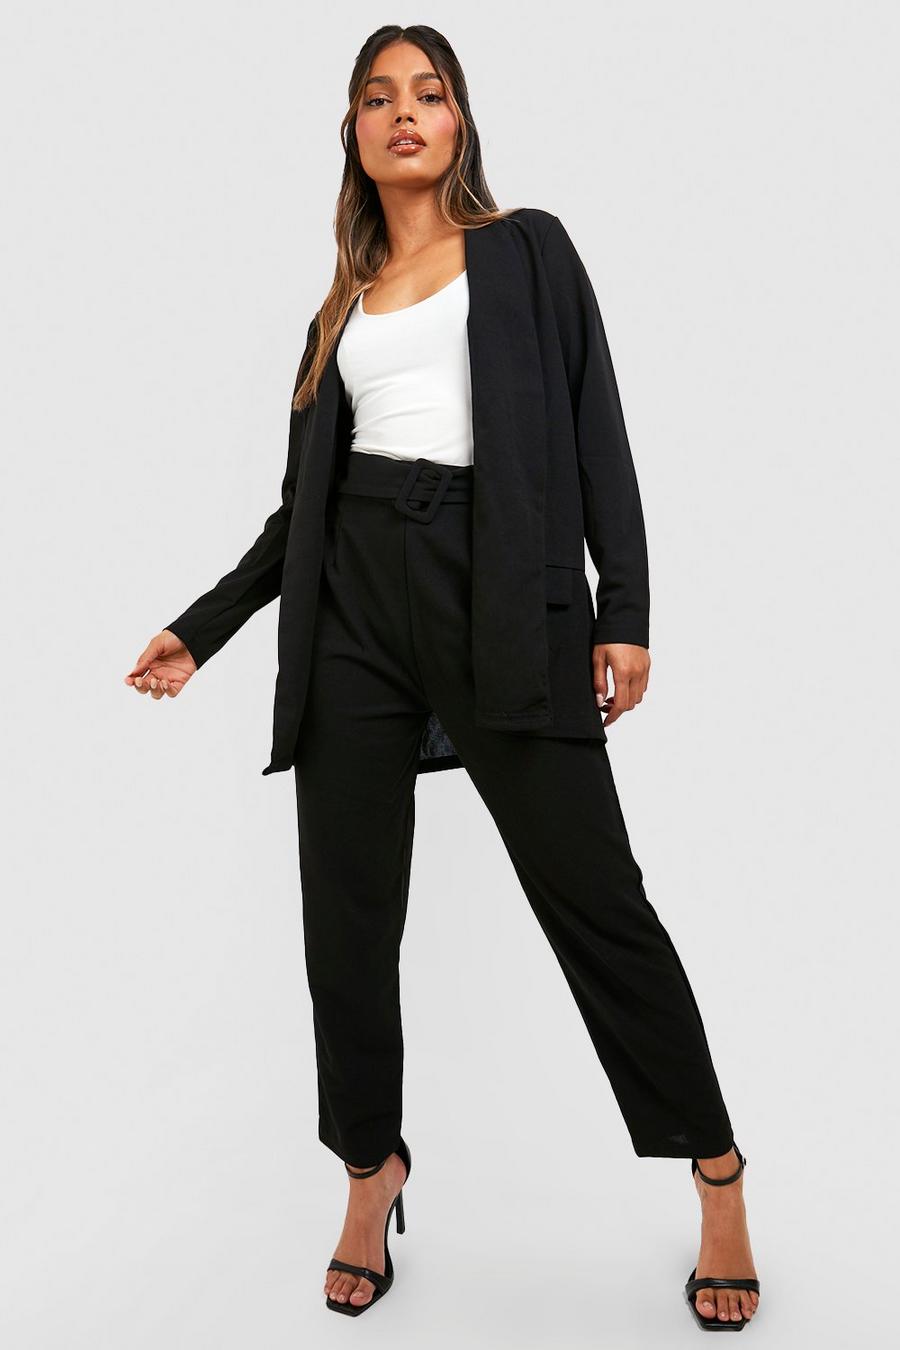 Black schwarz Tailored Blazer And Self Fabric Belt Trouser Suit